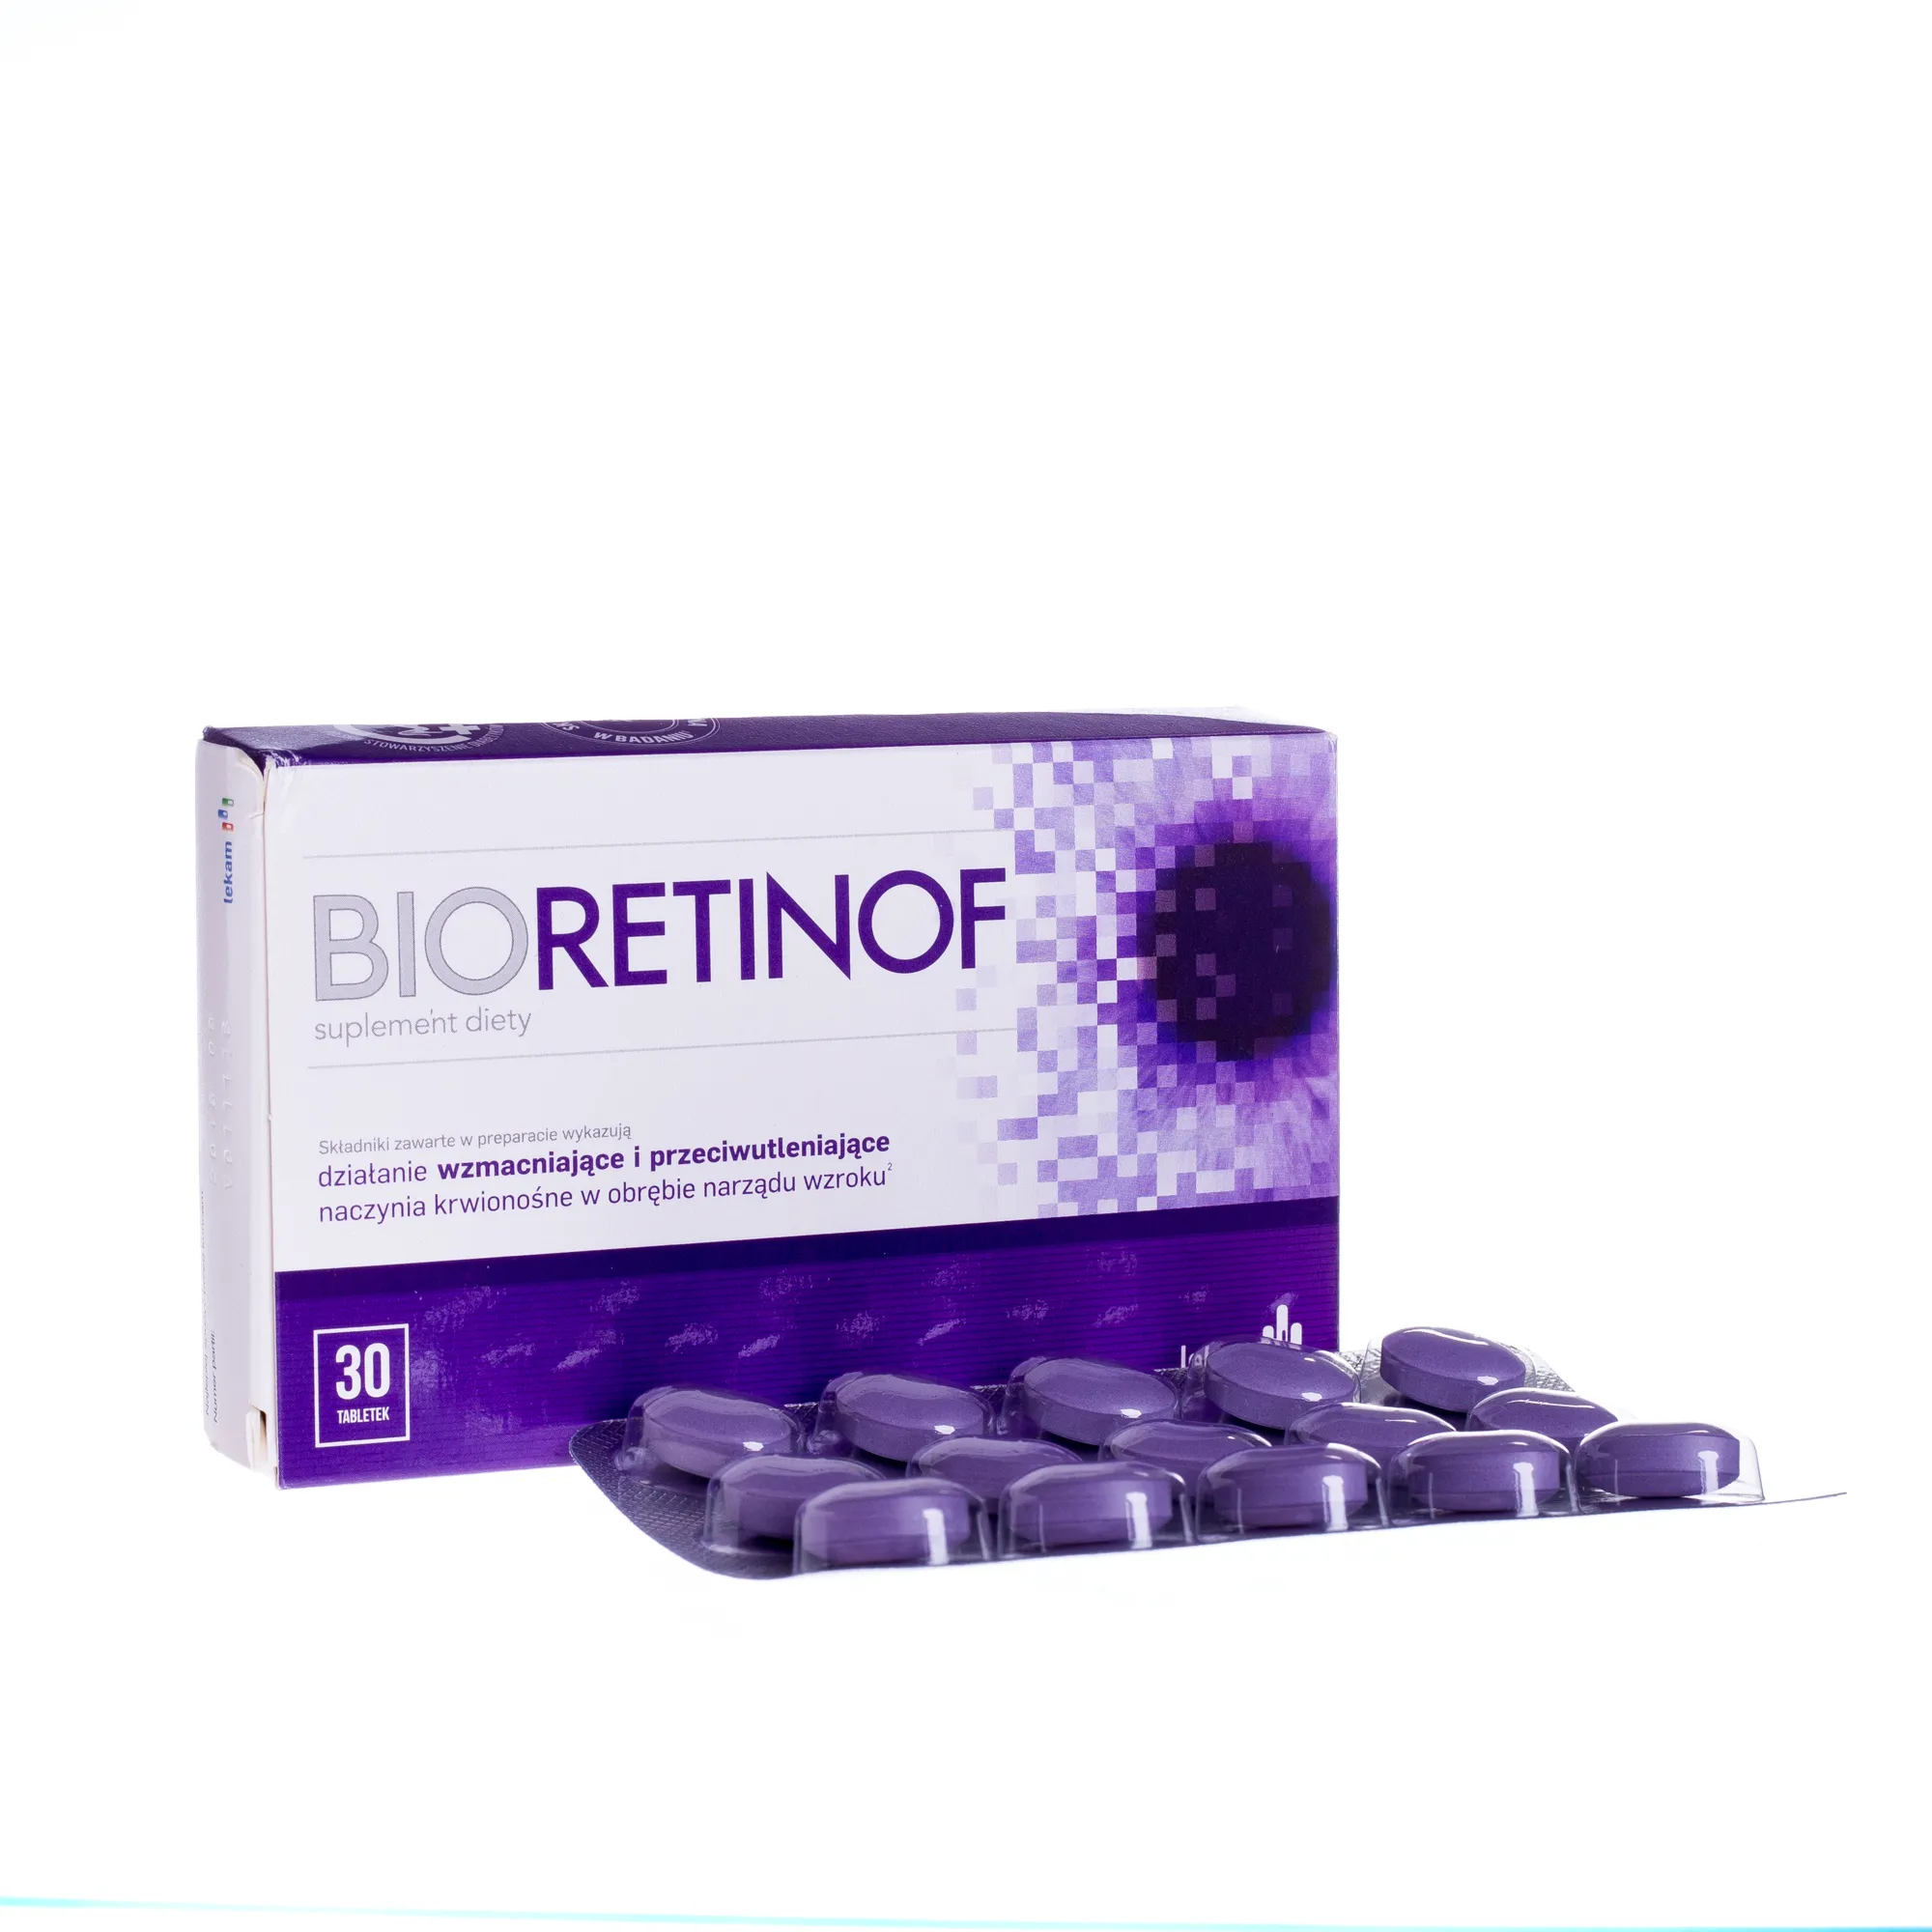 Bioretinof, suplement diety, 30 tabletek 